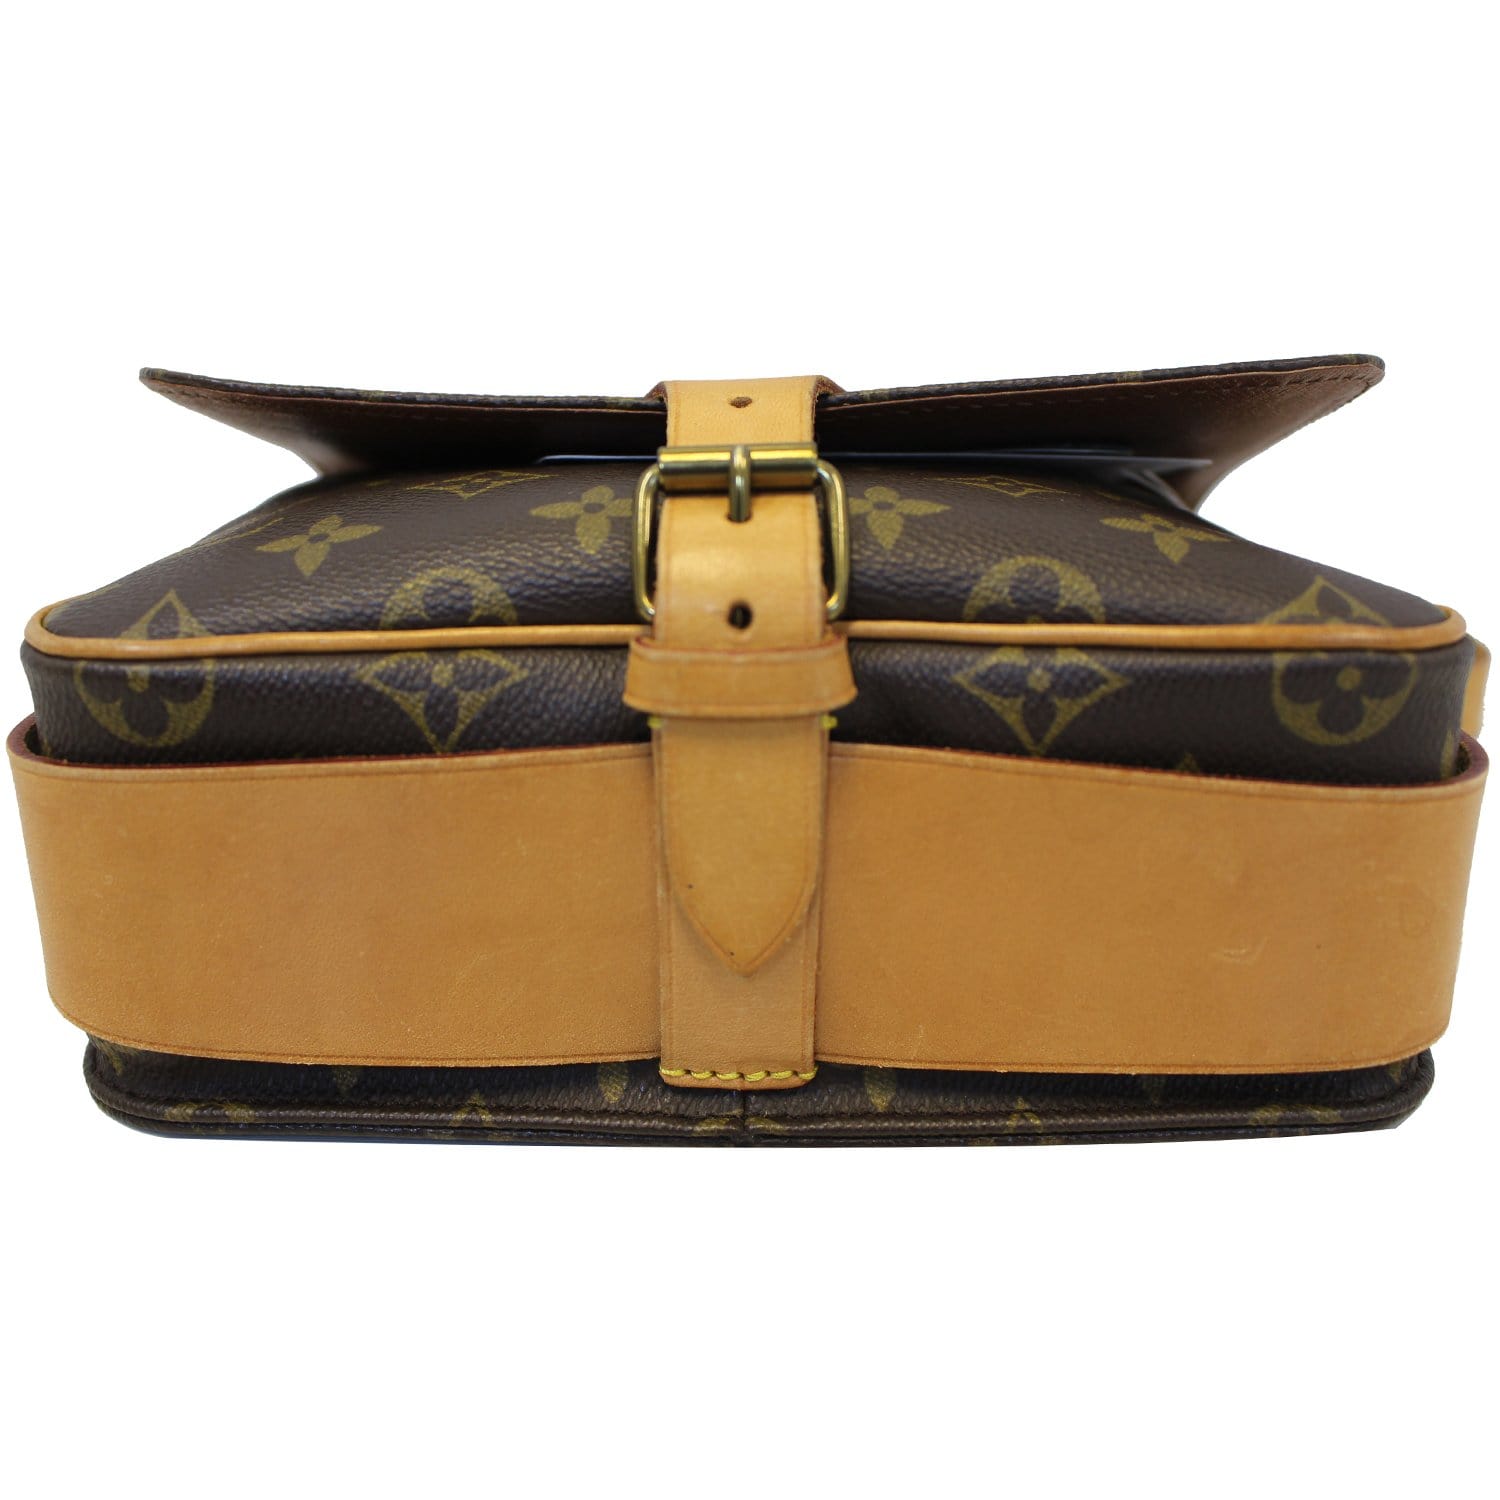 Louis Vuitton Cartouchiere MM - Good or Bag